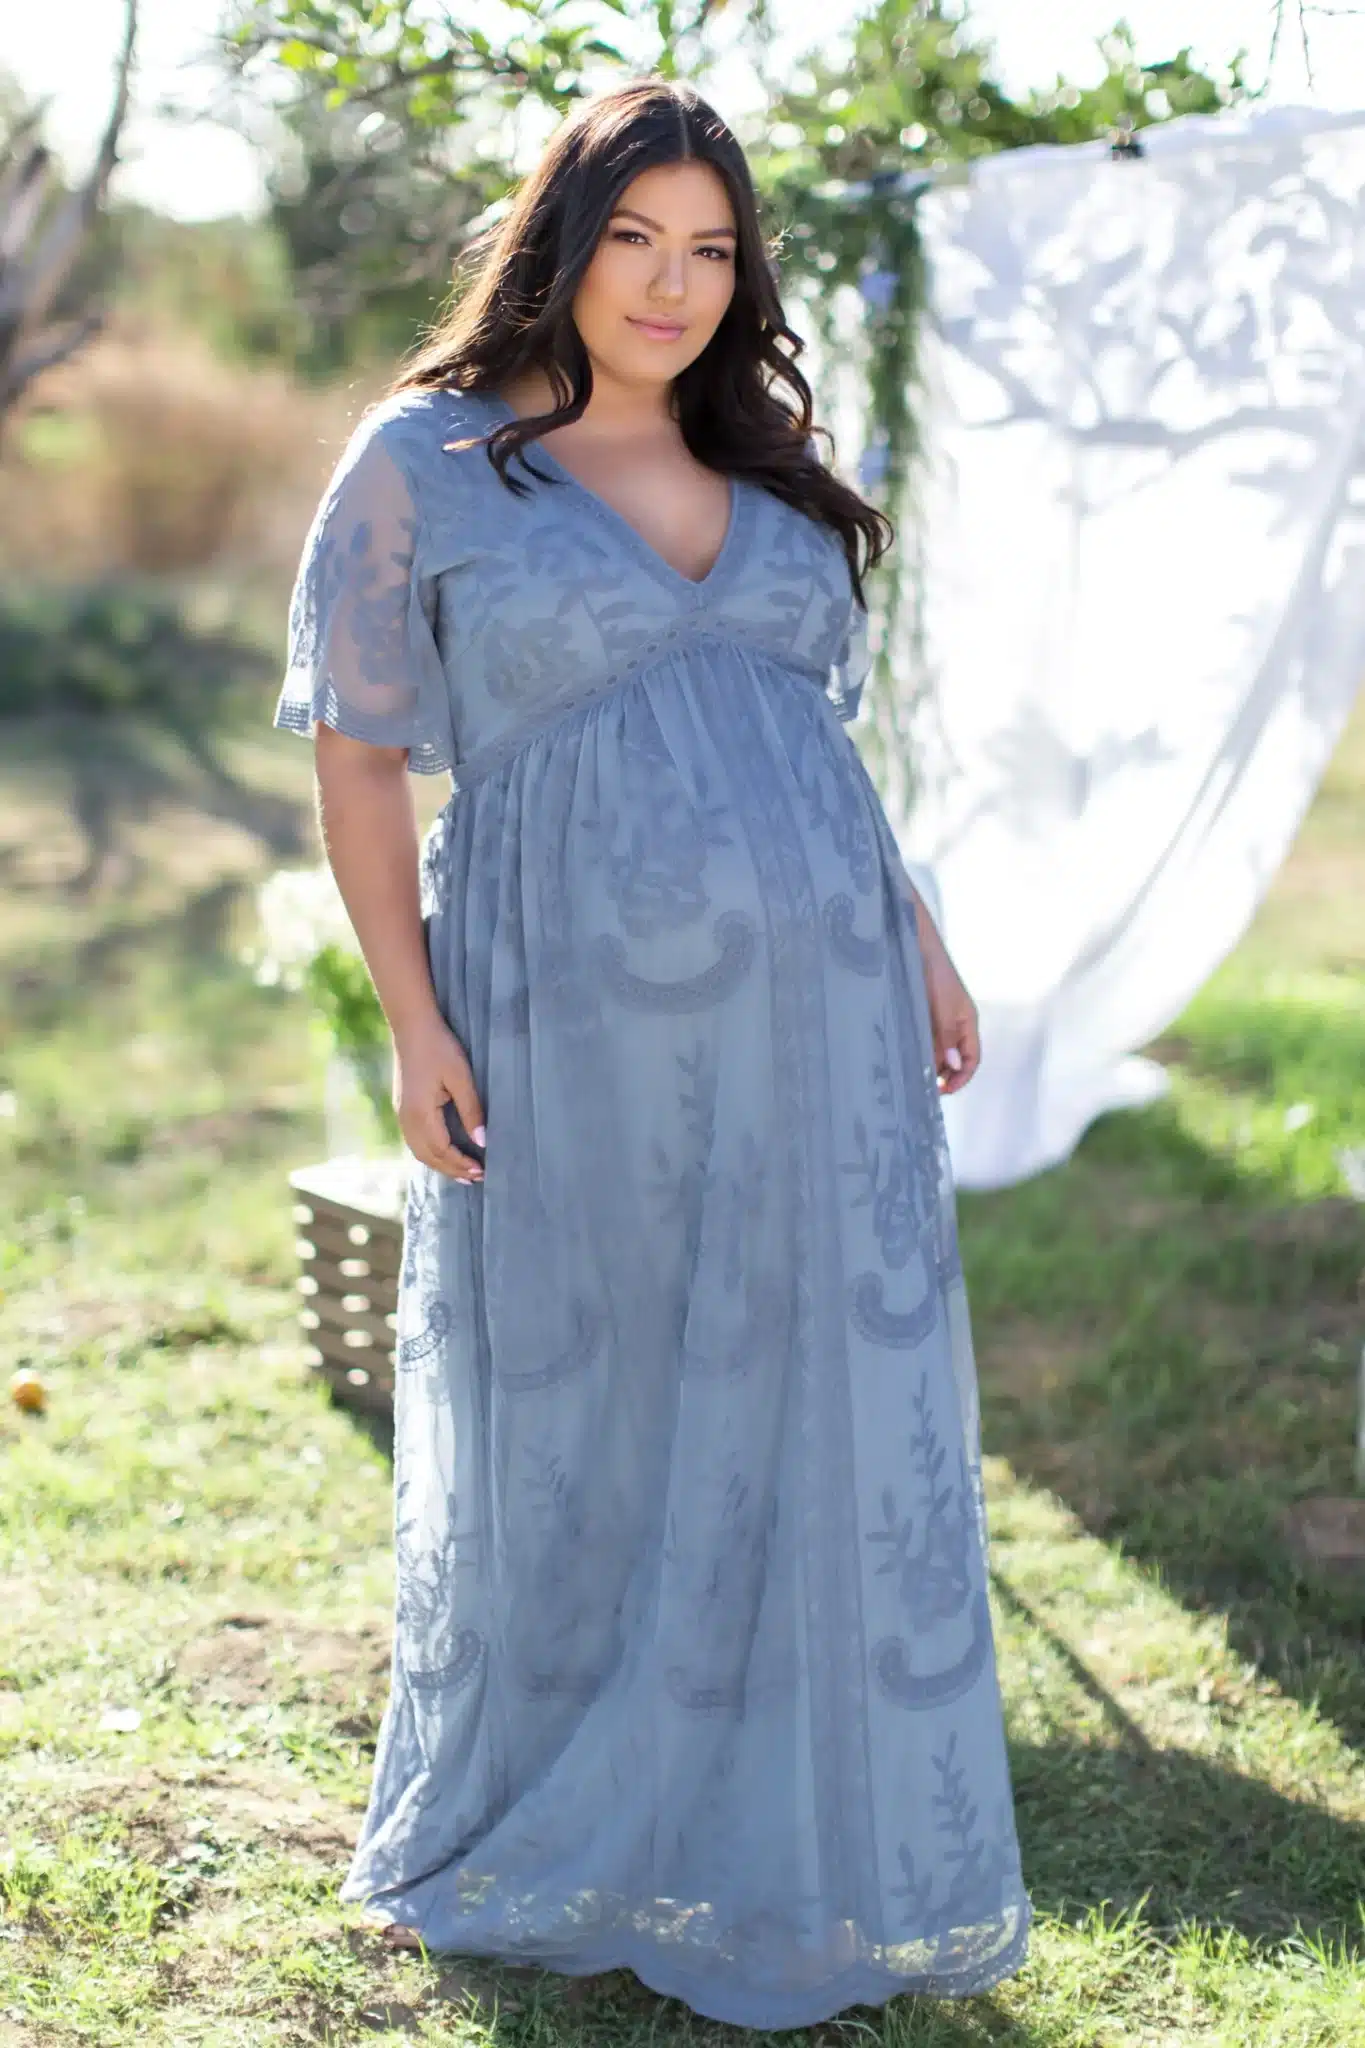 plus size maternity photoshoot dress